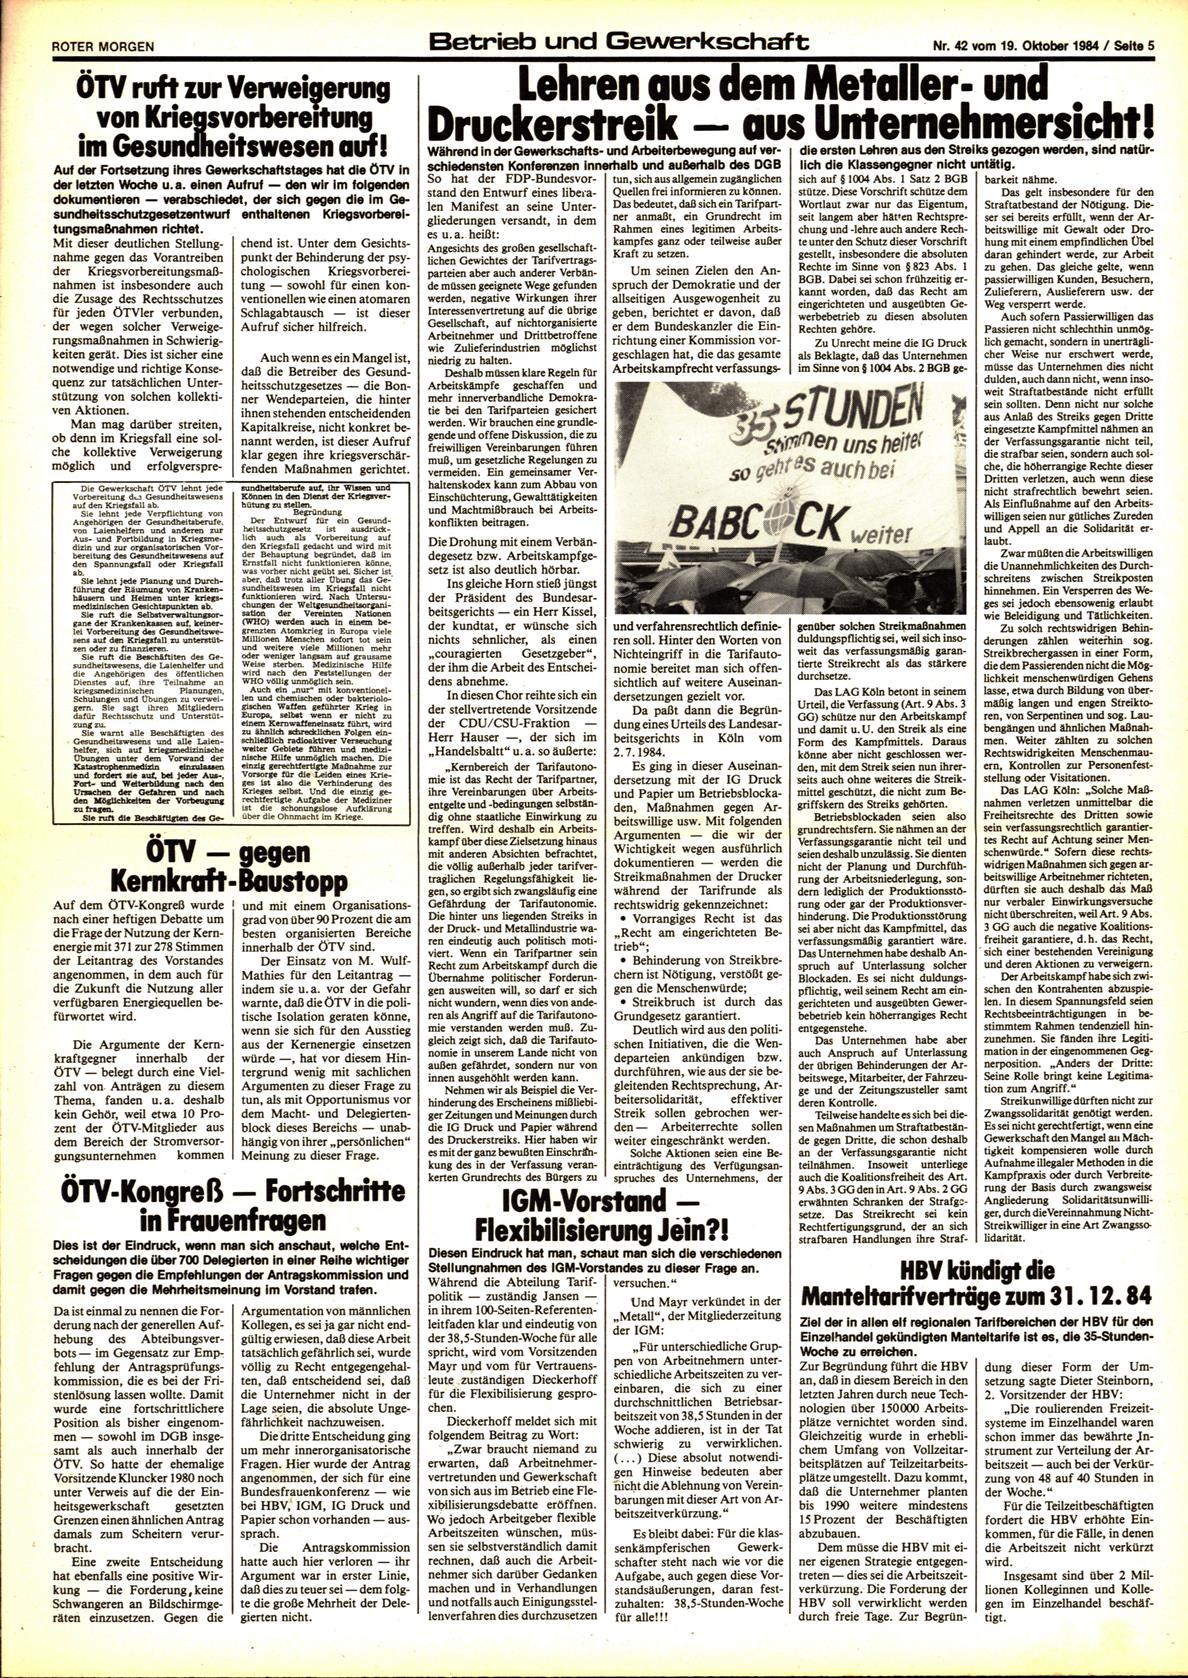 Roter Morgen, 18. Jg., 19. Oktober 1984, Nr. 42, Seite 5